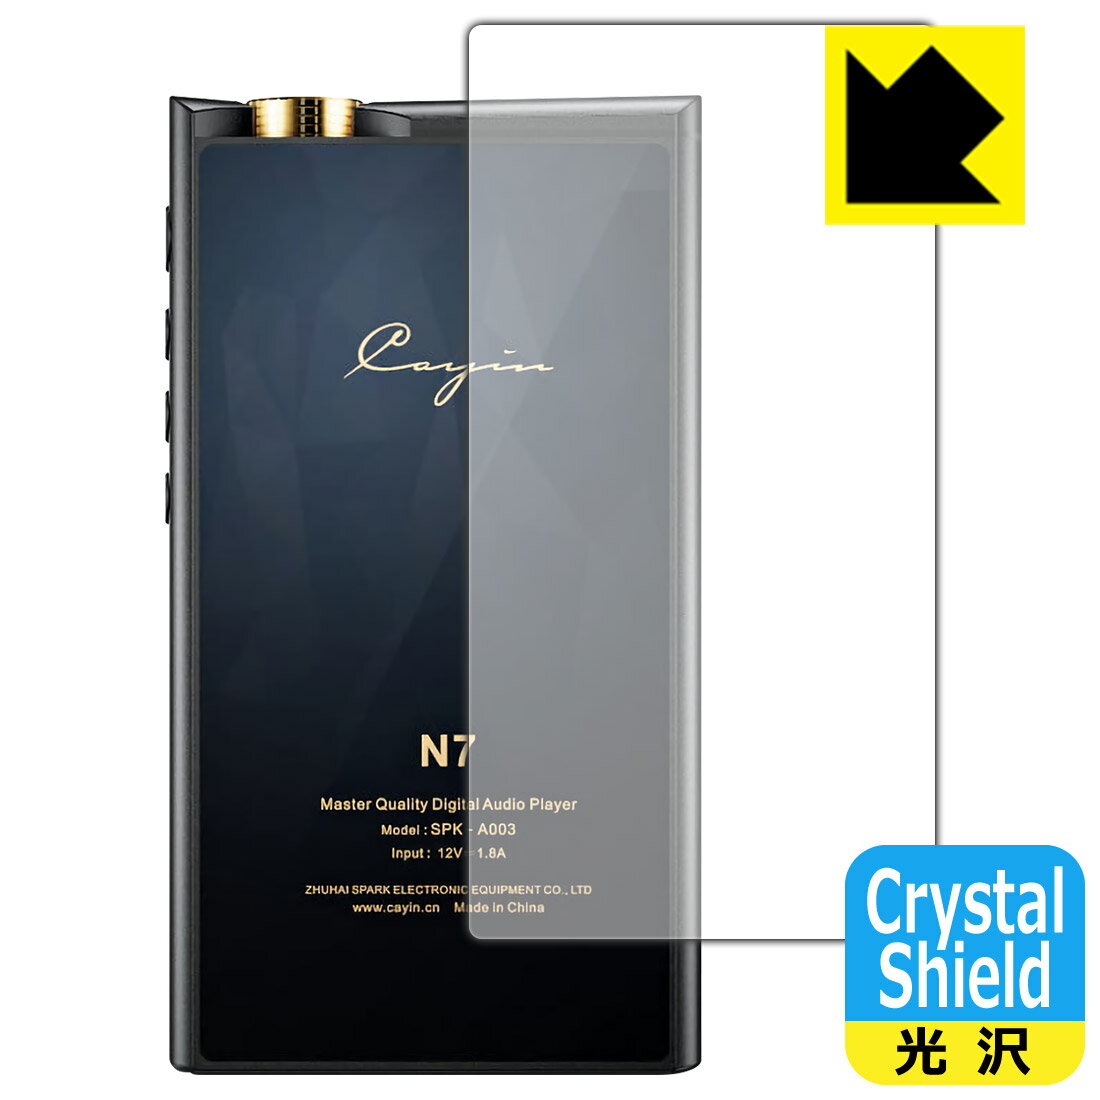 Crystal Shield【光沢】保護フィルム Cayin N7 (背面用) 3枚セット 日本製 自社製造直販